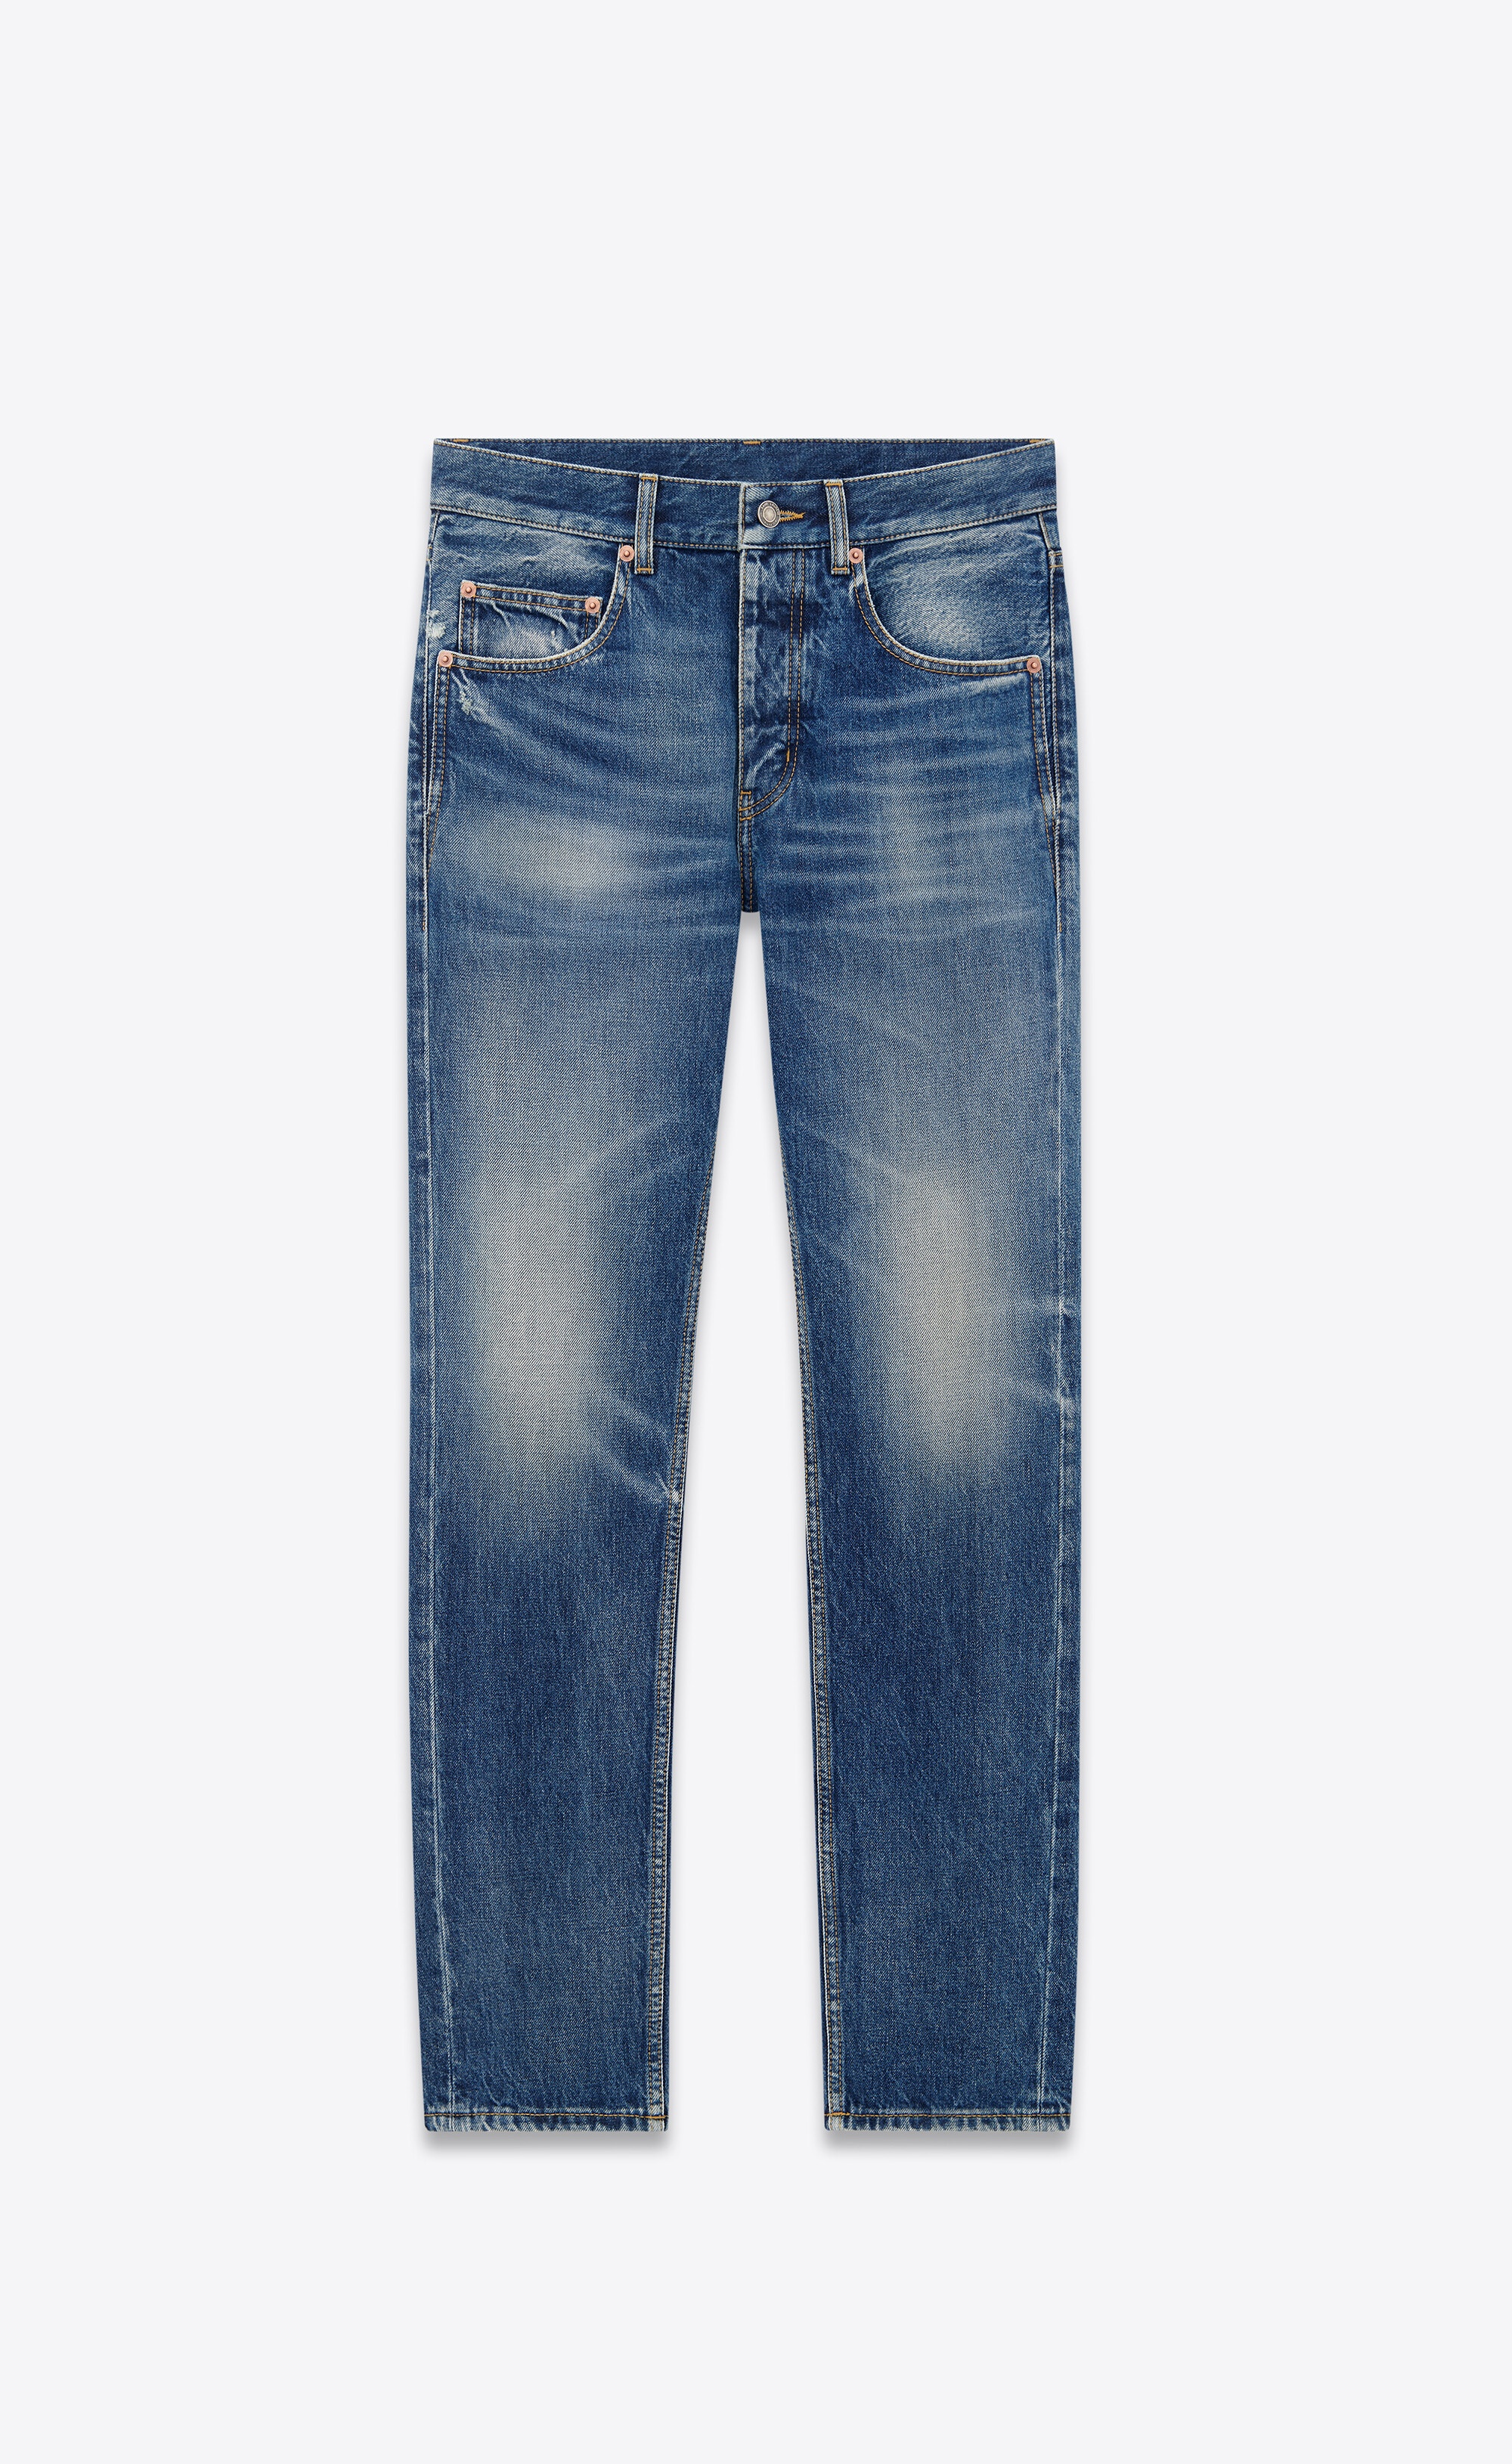 baggy jeans in deauville beach blue denim - 1